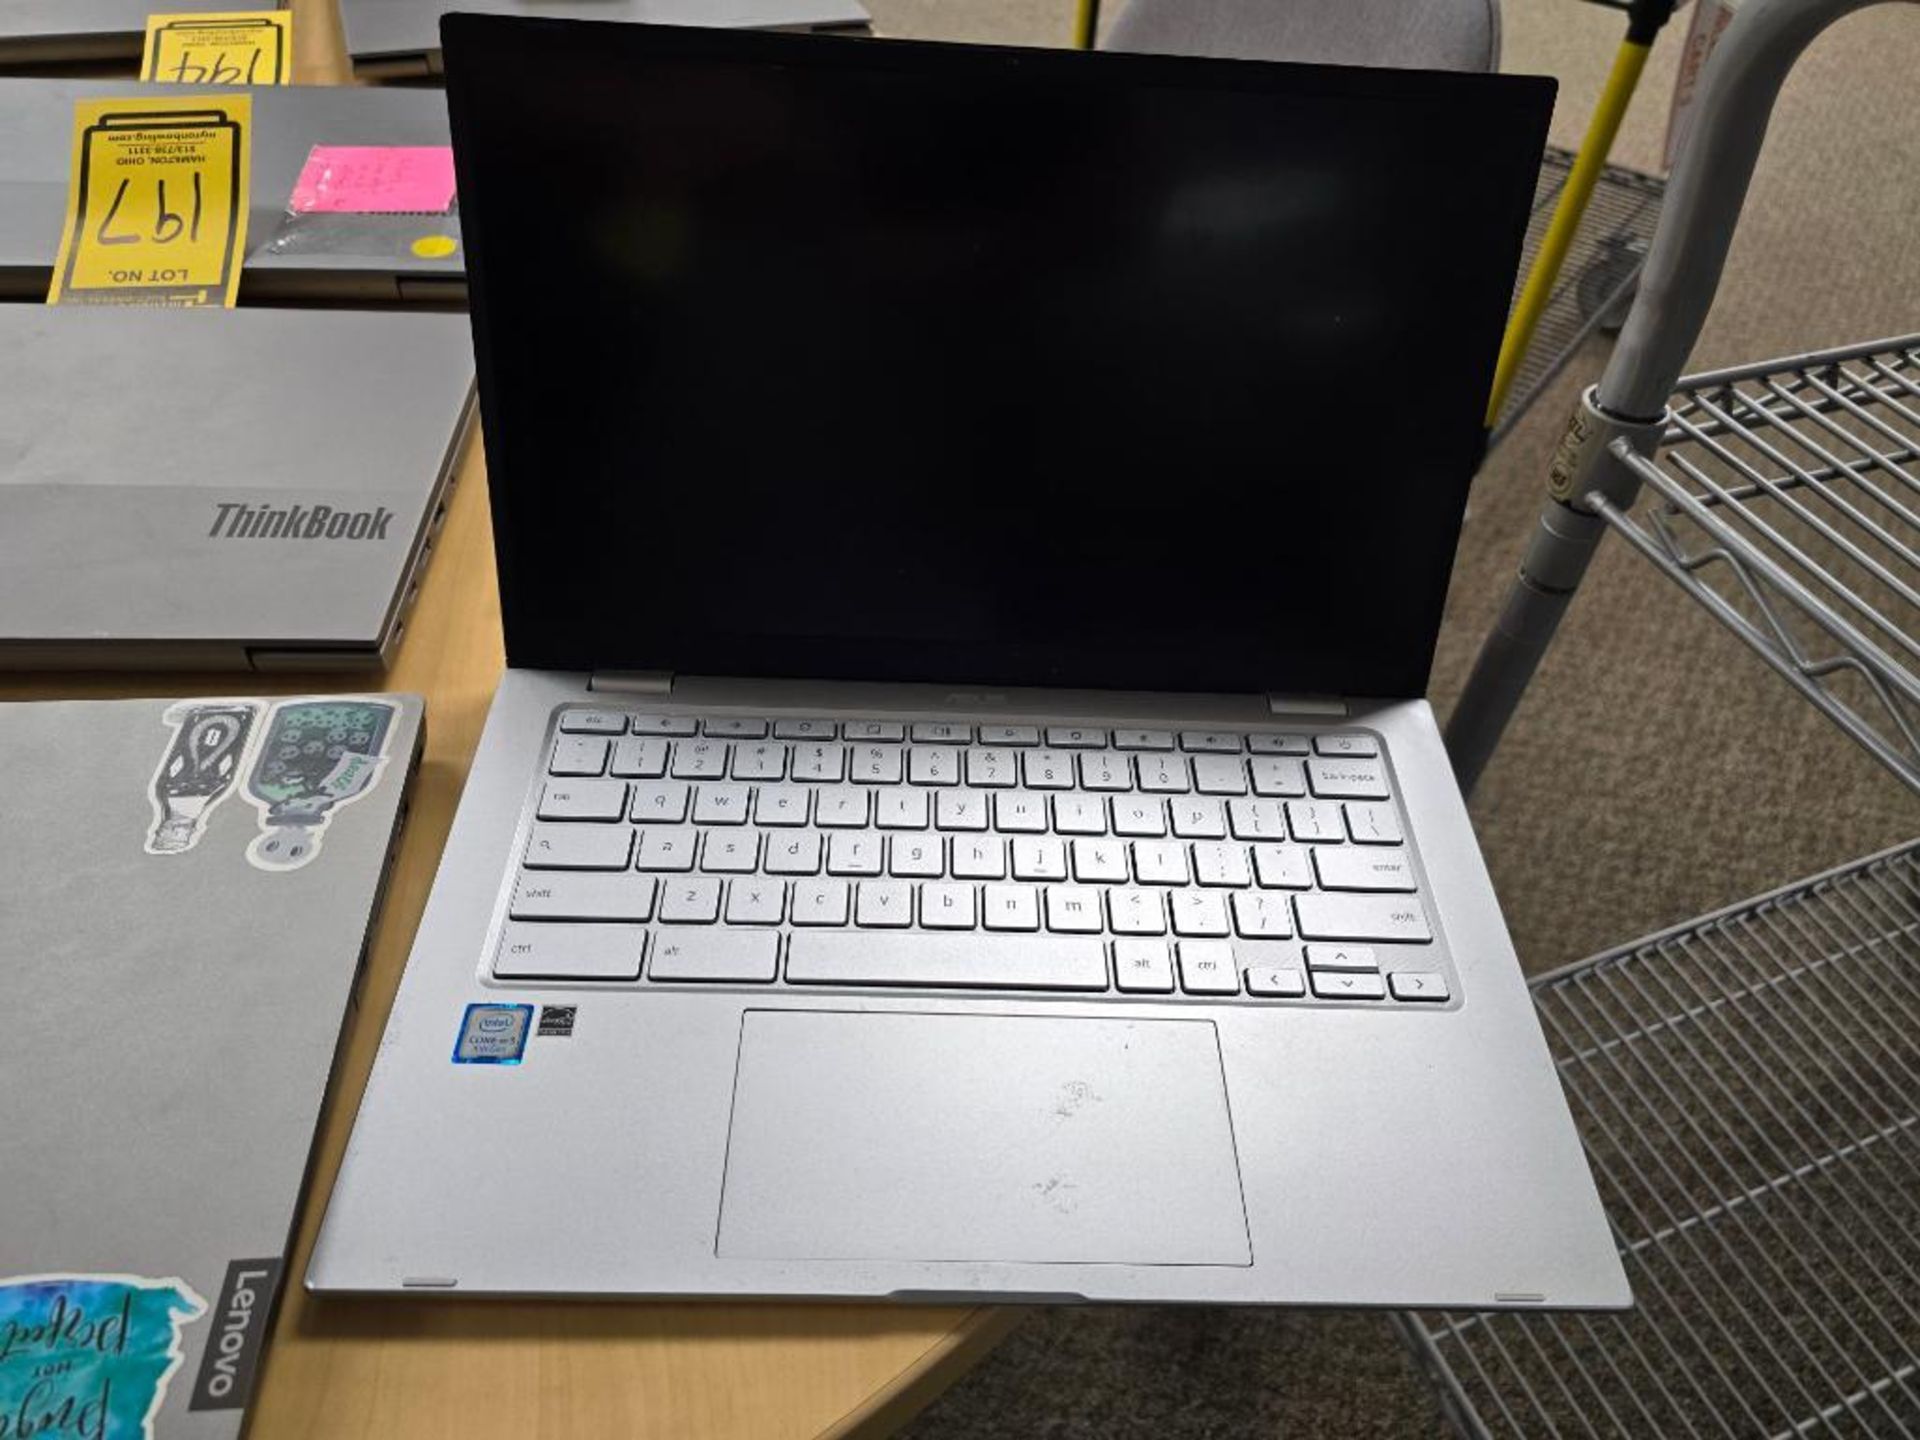 Asus Crome Laptop, I TWL Core M3 8th Gen Processor - Image 2 of 4